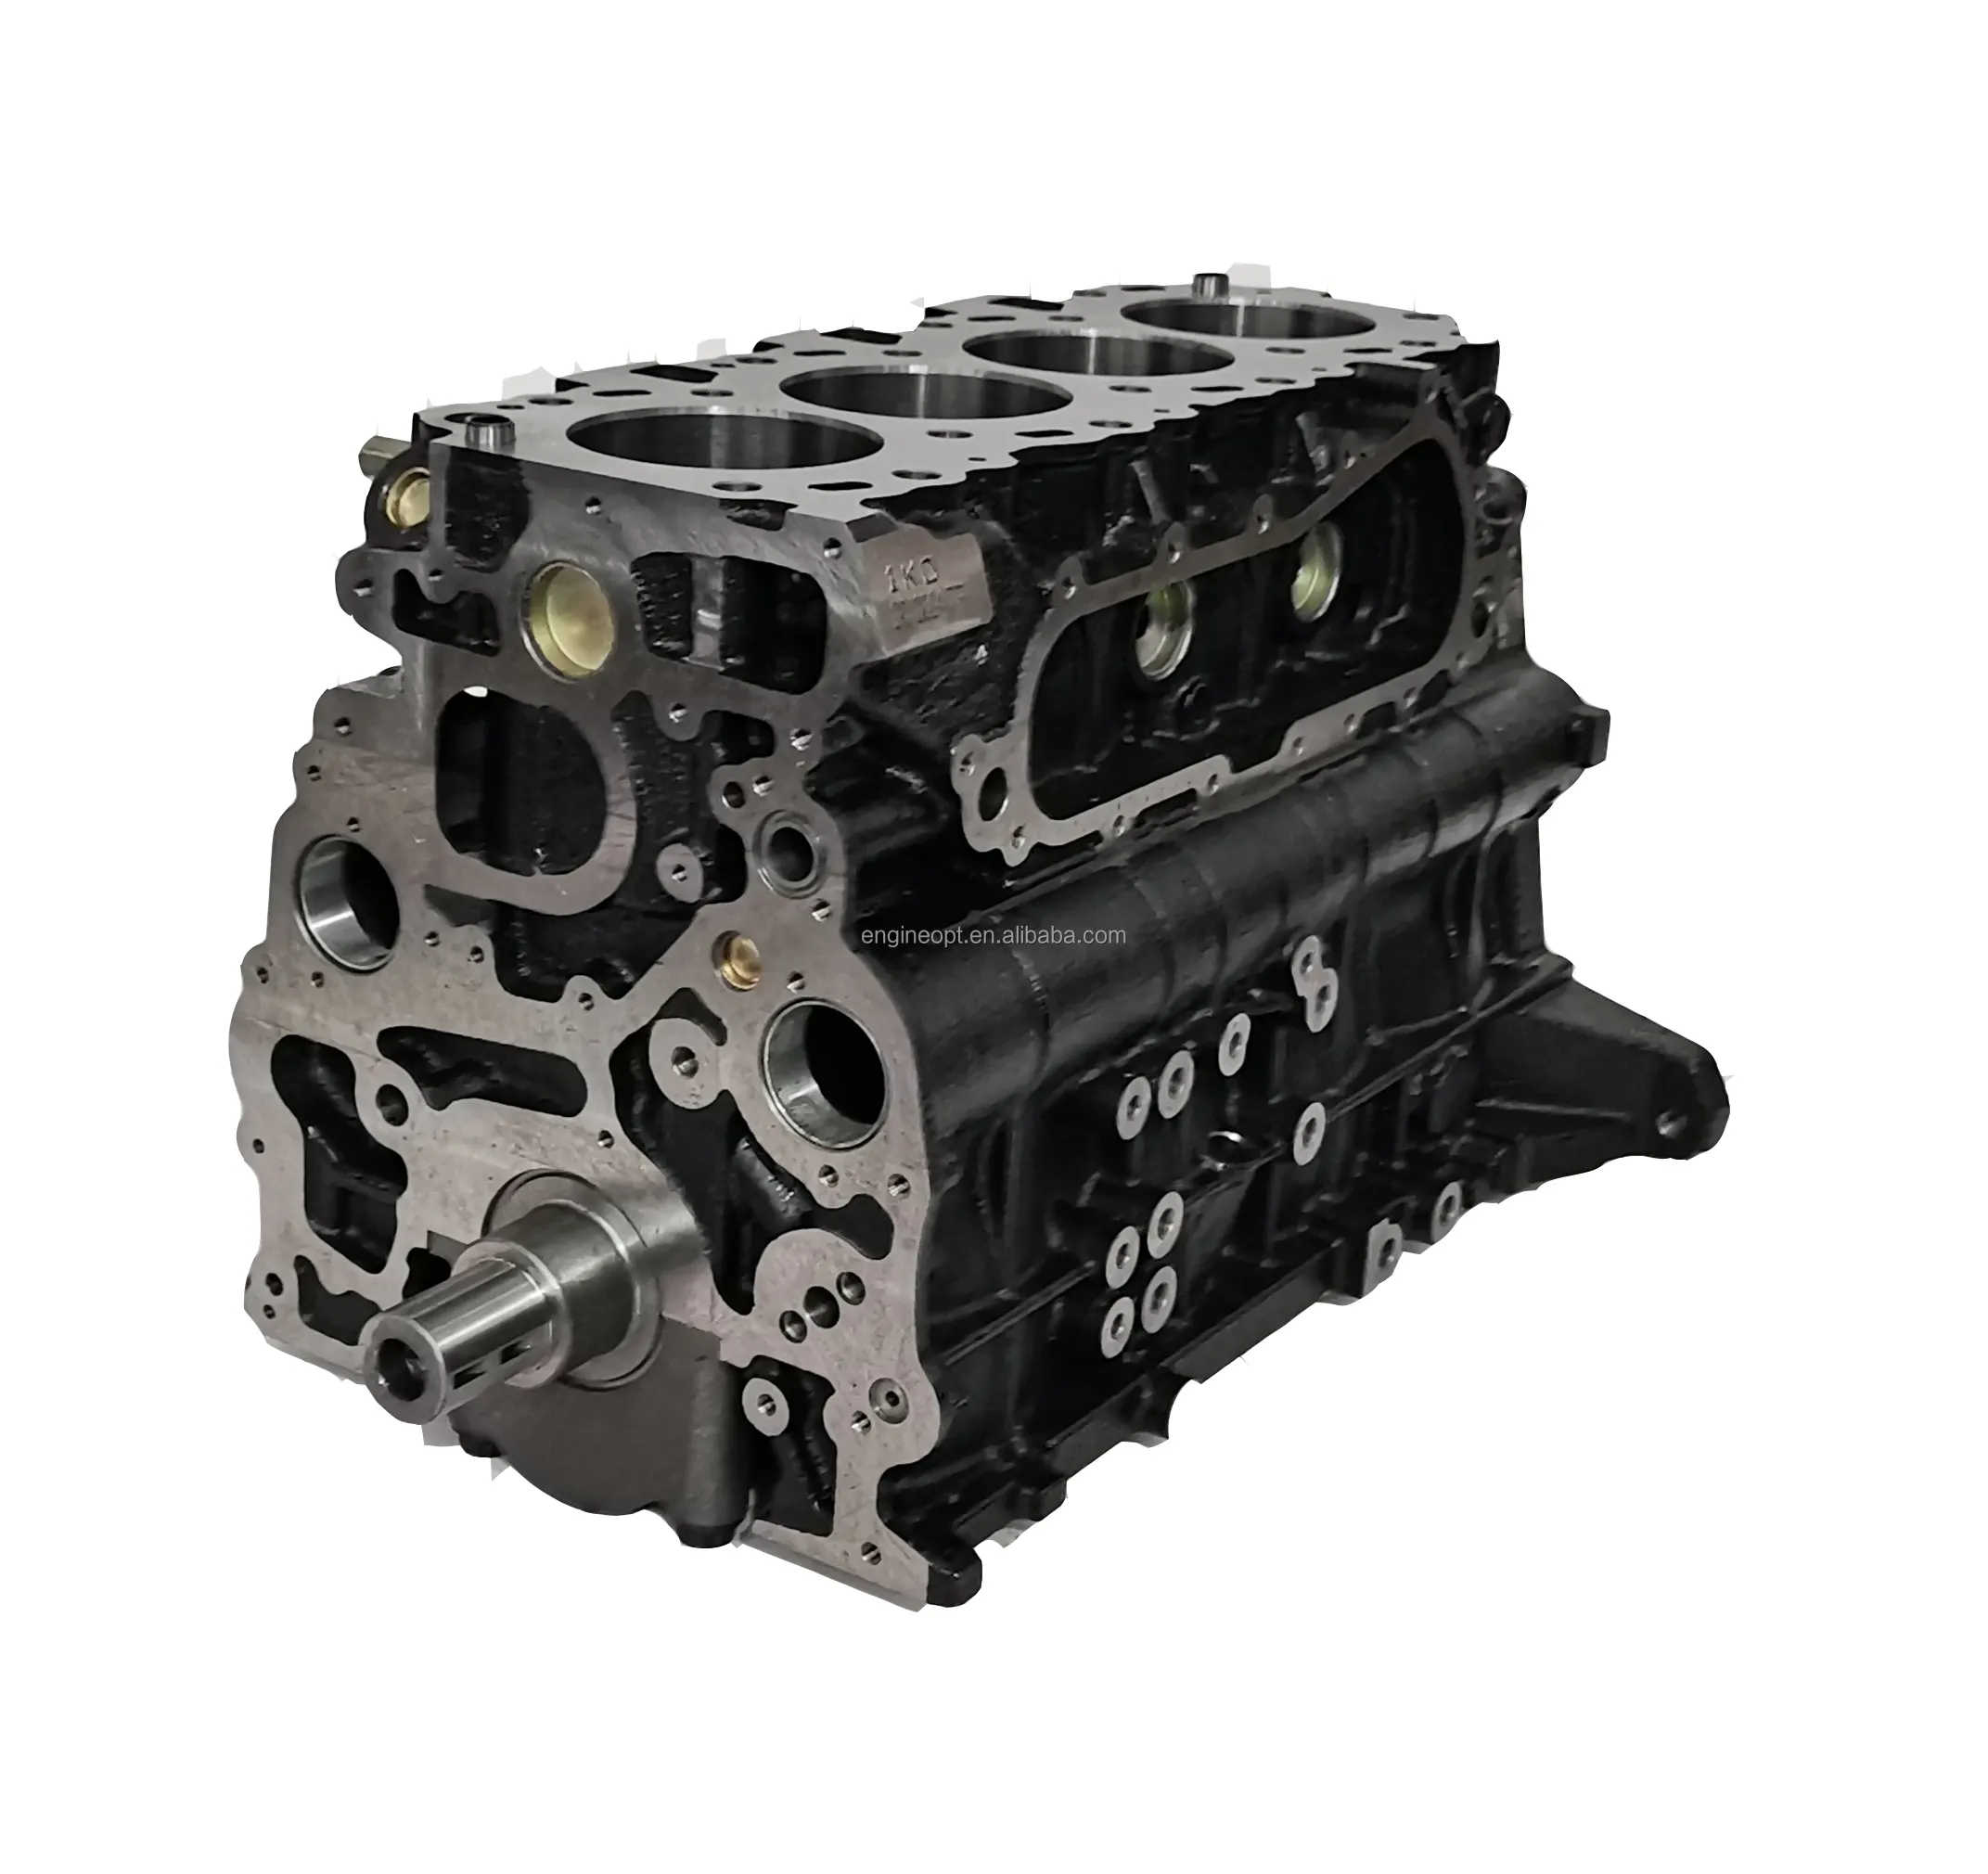 Brand New Diesel engine 1KD Short block With Valve Chamber Cover For Hiace van KDH200 2005-2018 HILUX VIGO